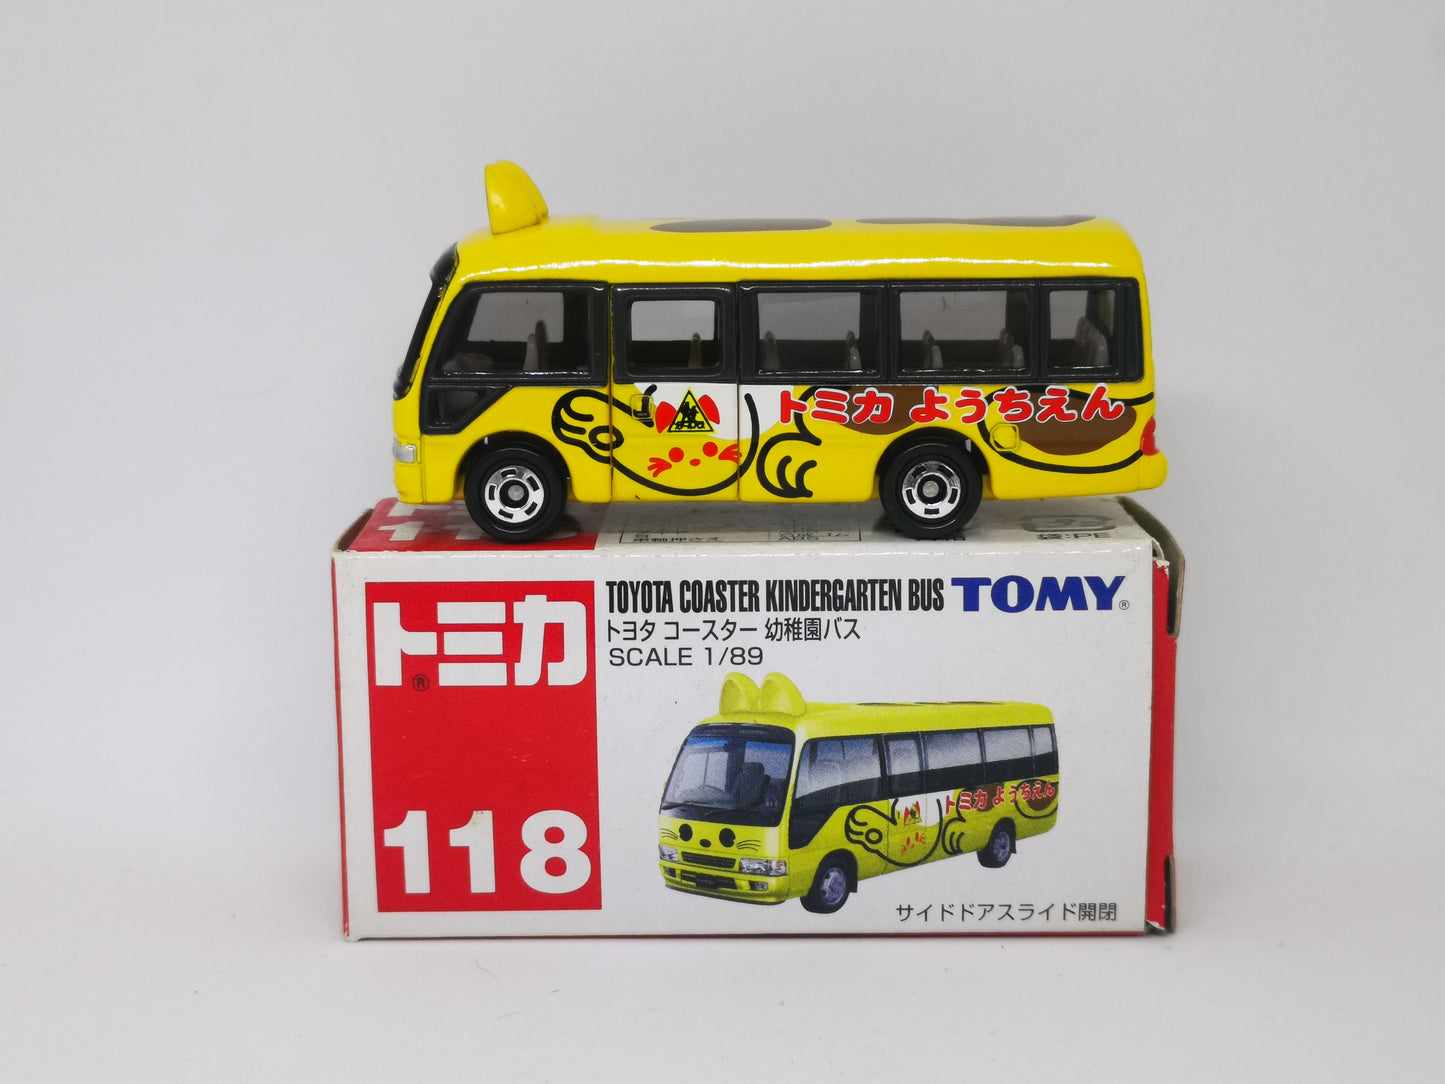 Tomica No.118 Toyota Coaster Kindergarten Bus